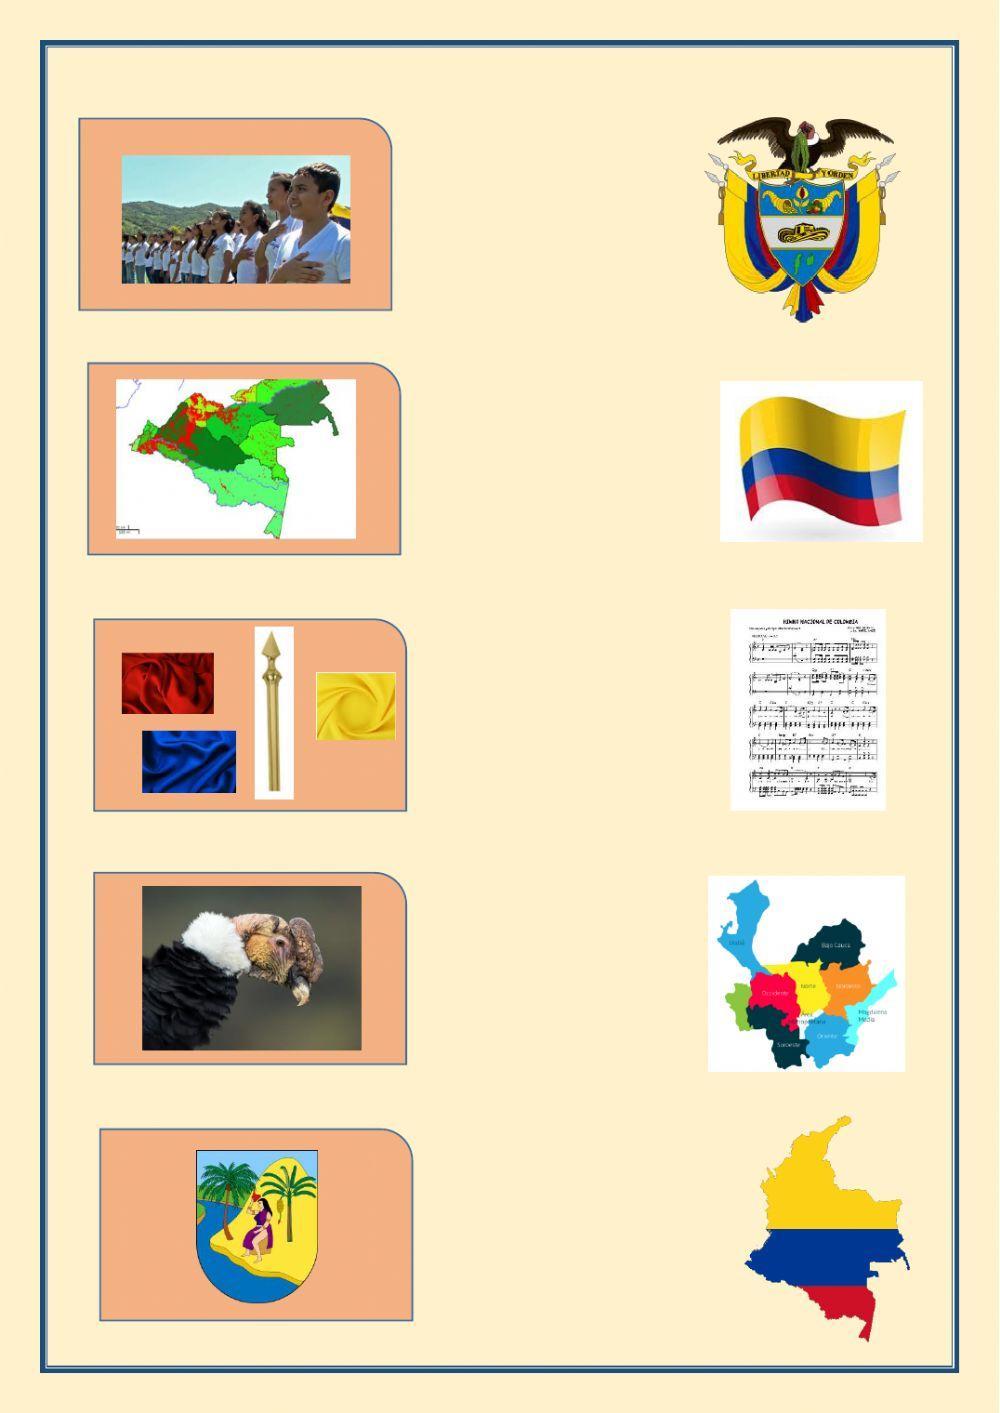 Colombian National Symbols